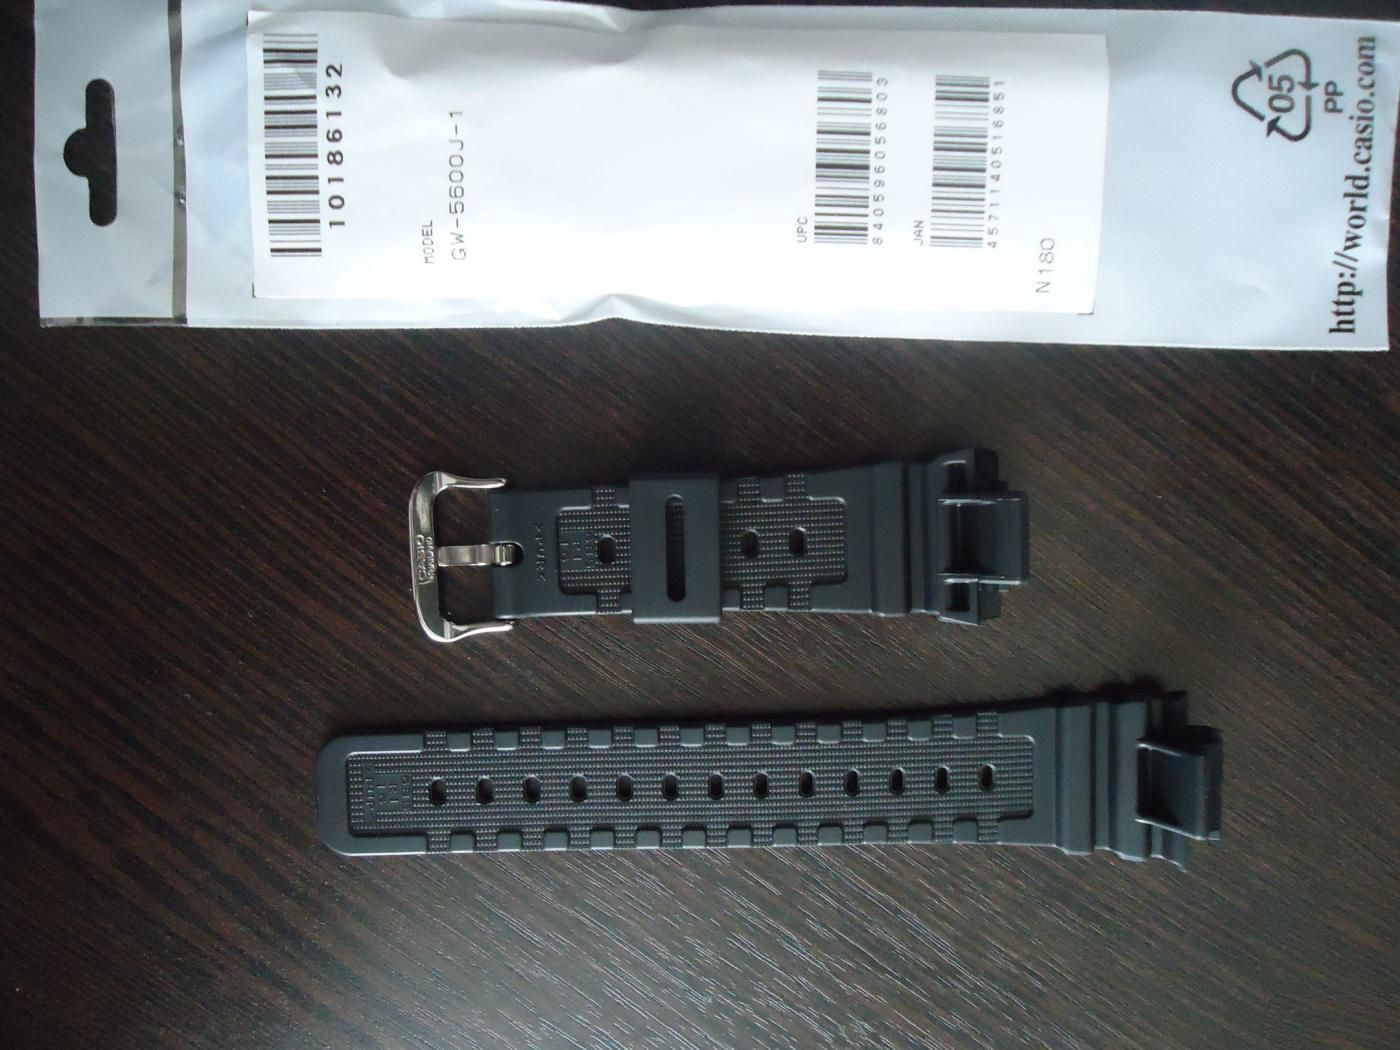 Casio Original Black Watch Band Strap And Similar Items